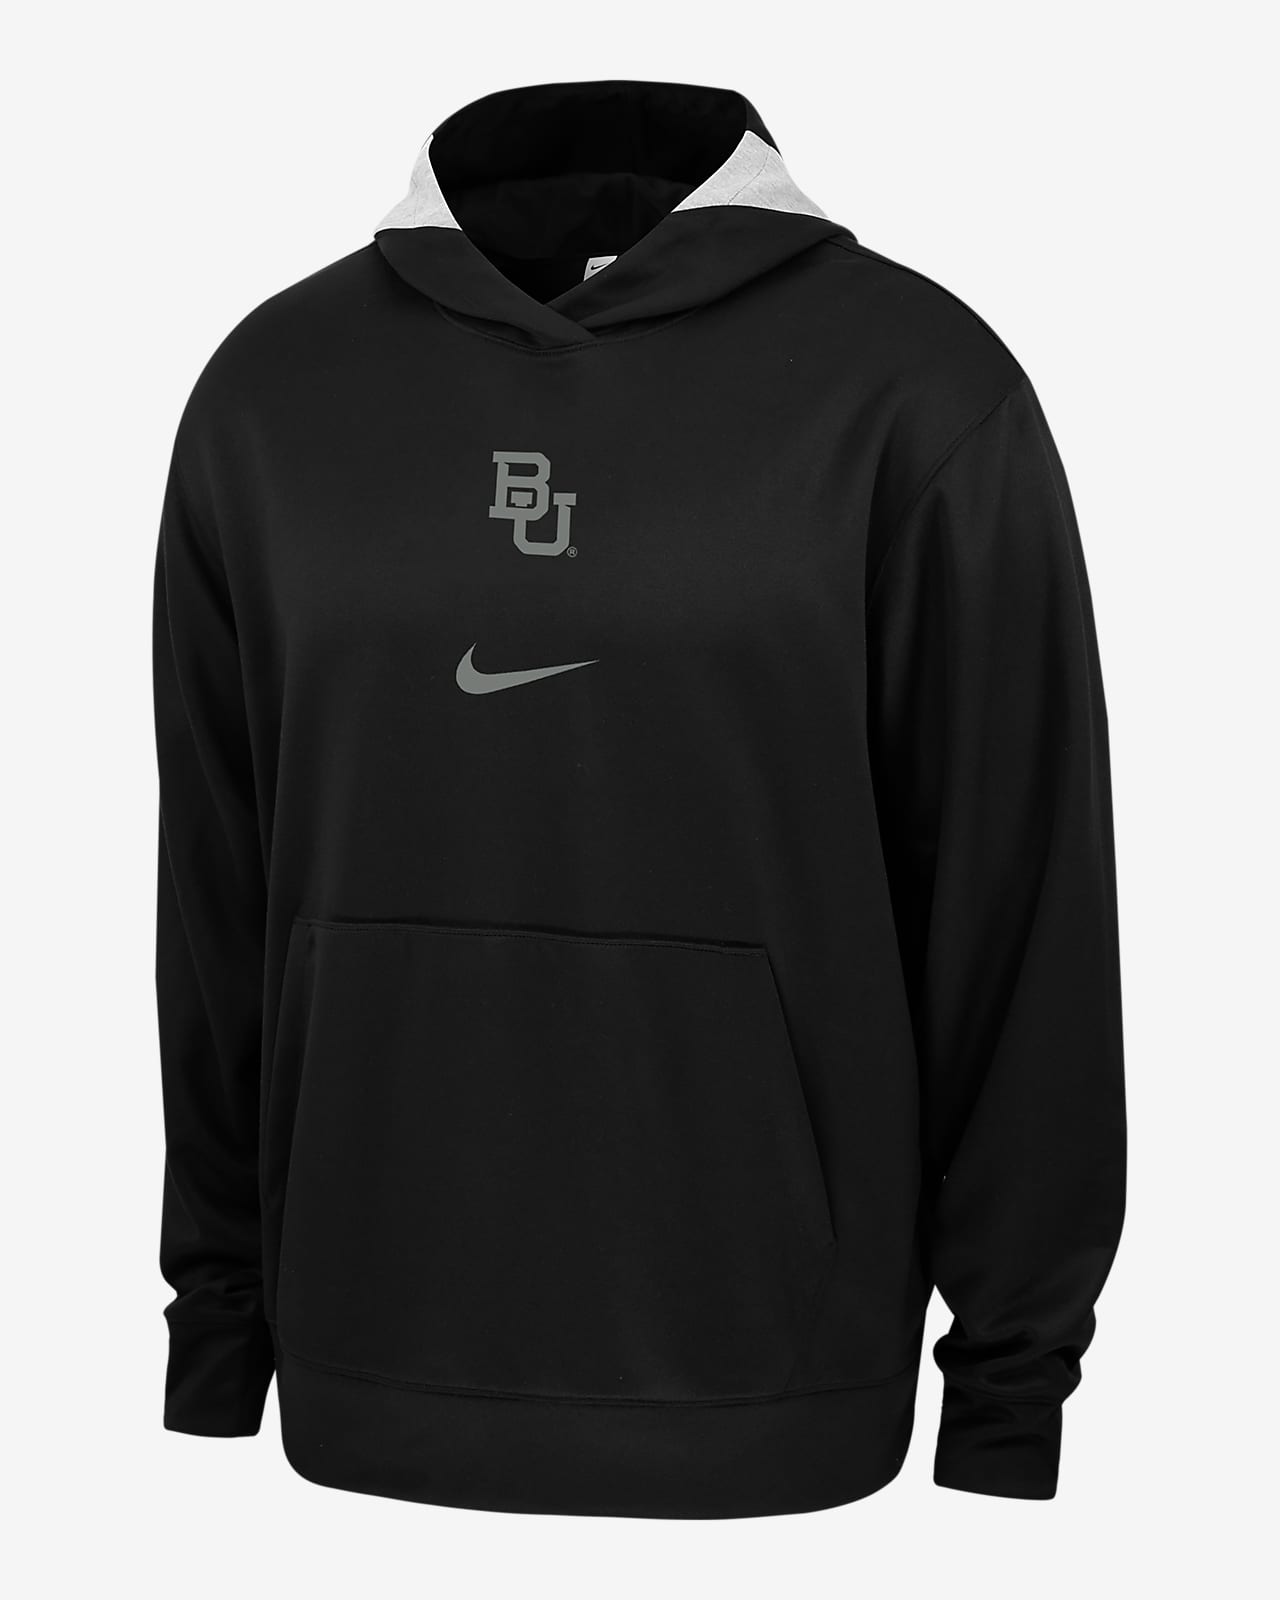 Baylor Spotlight Men's Nike College Hoodie